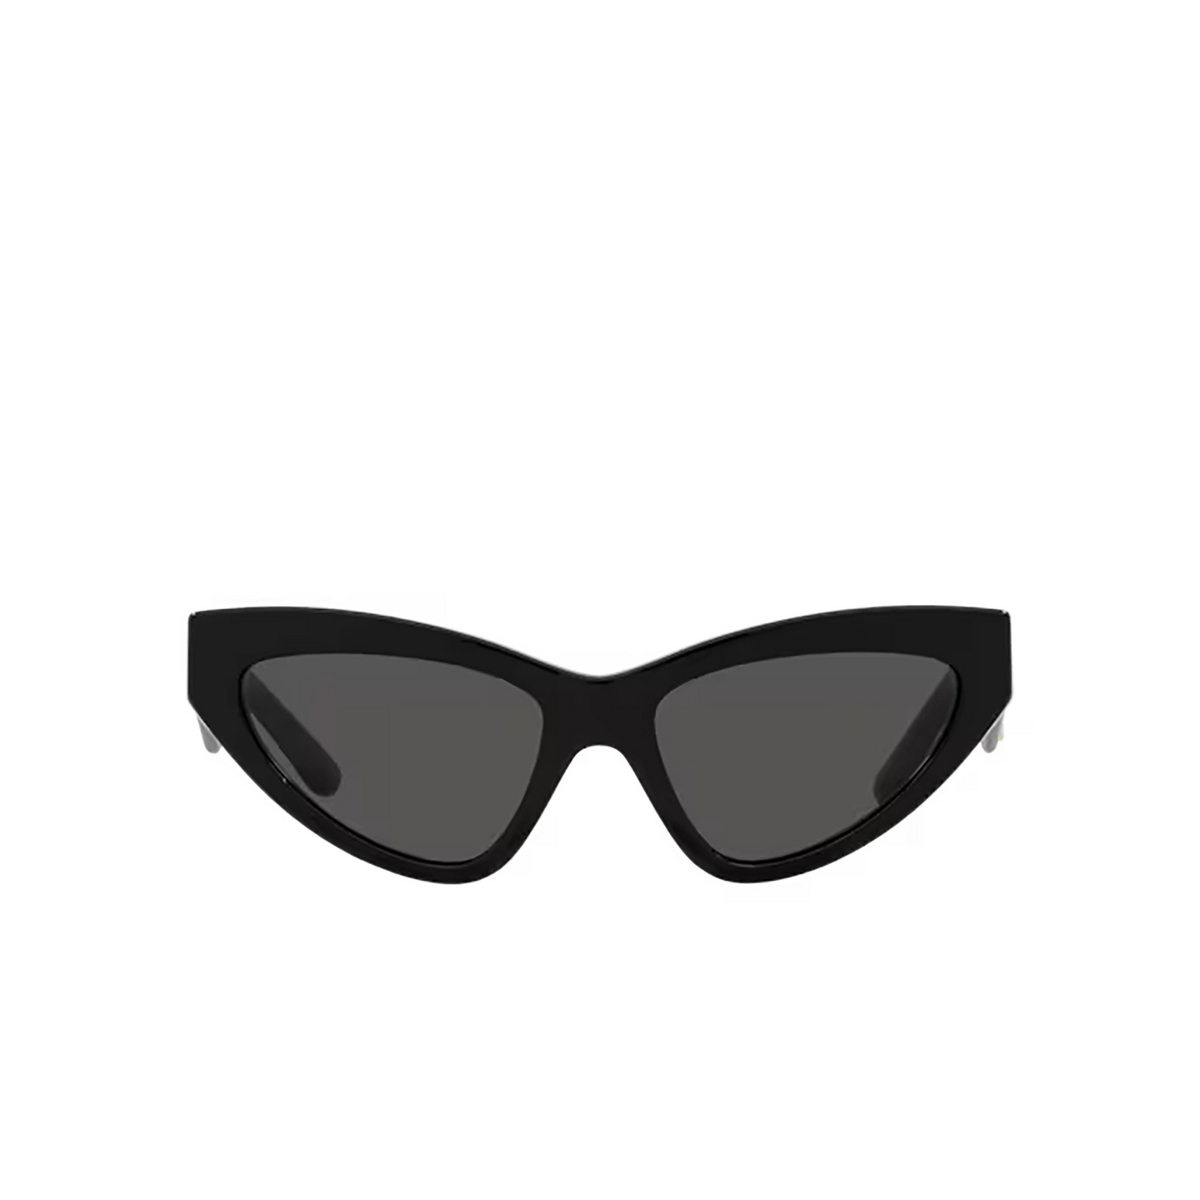 Dolce & Gabbana DG4439 Sunglasses 501/87 Black - front view